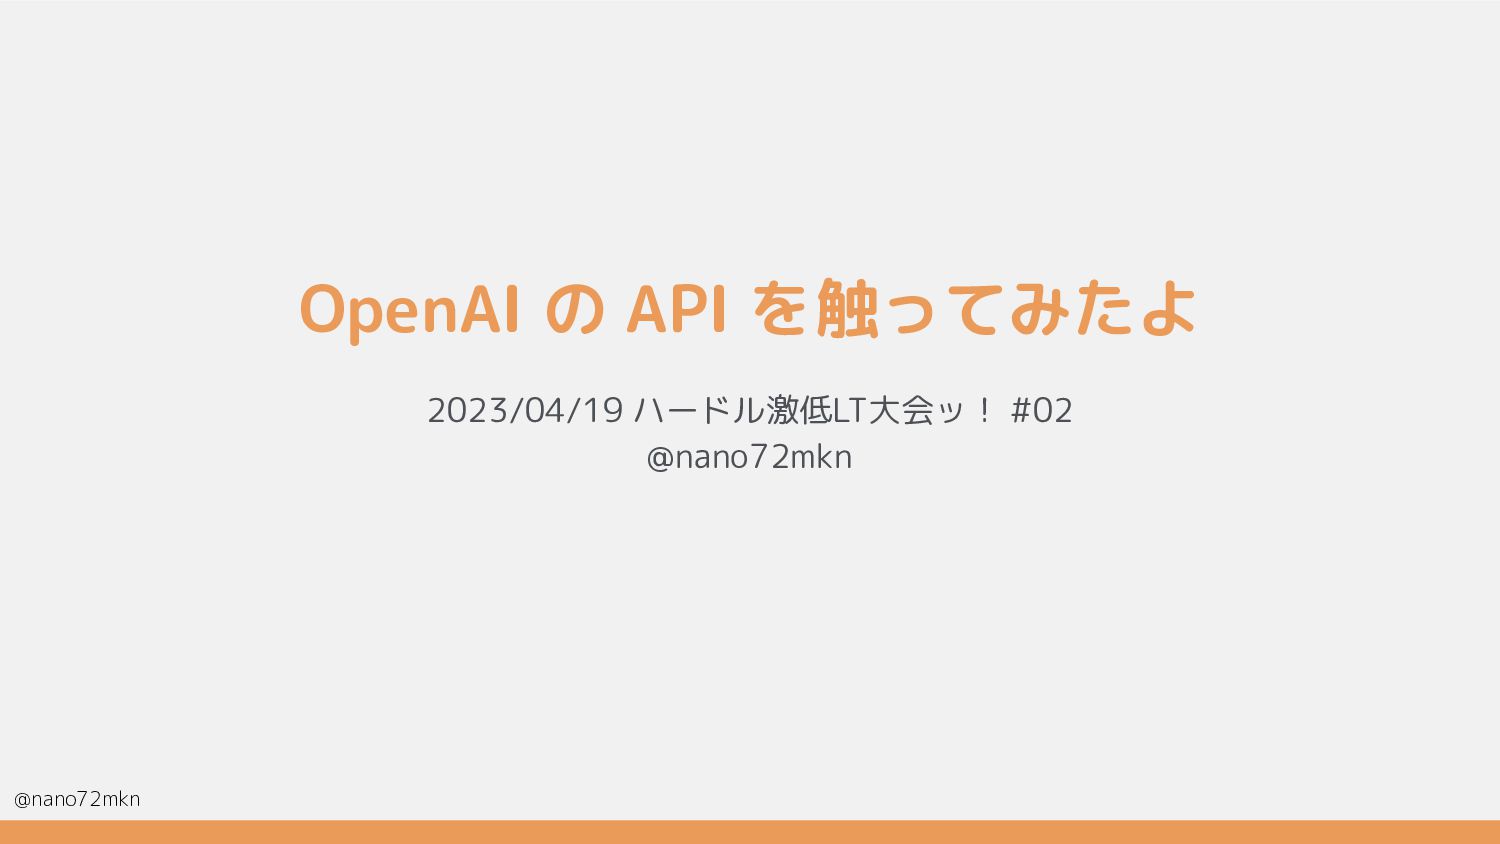 OpenAI APIを触ってみた - Speaker Deck